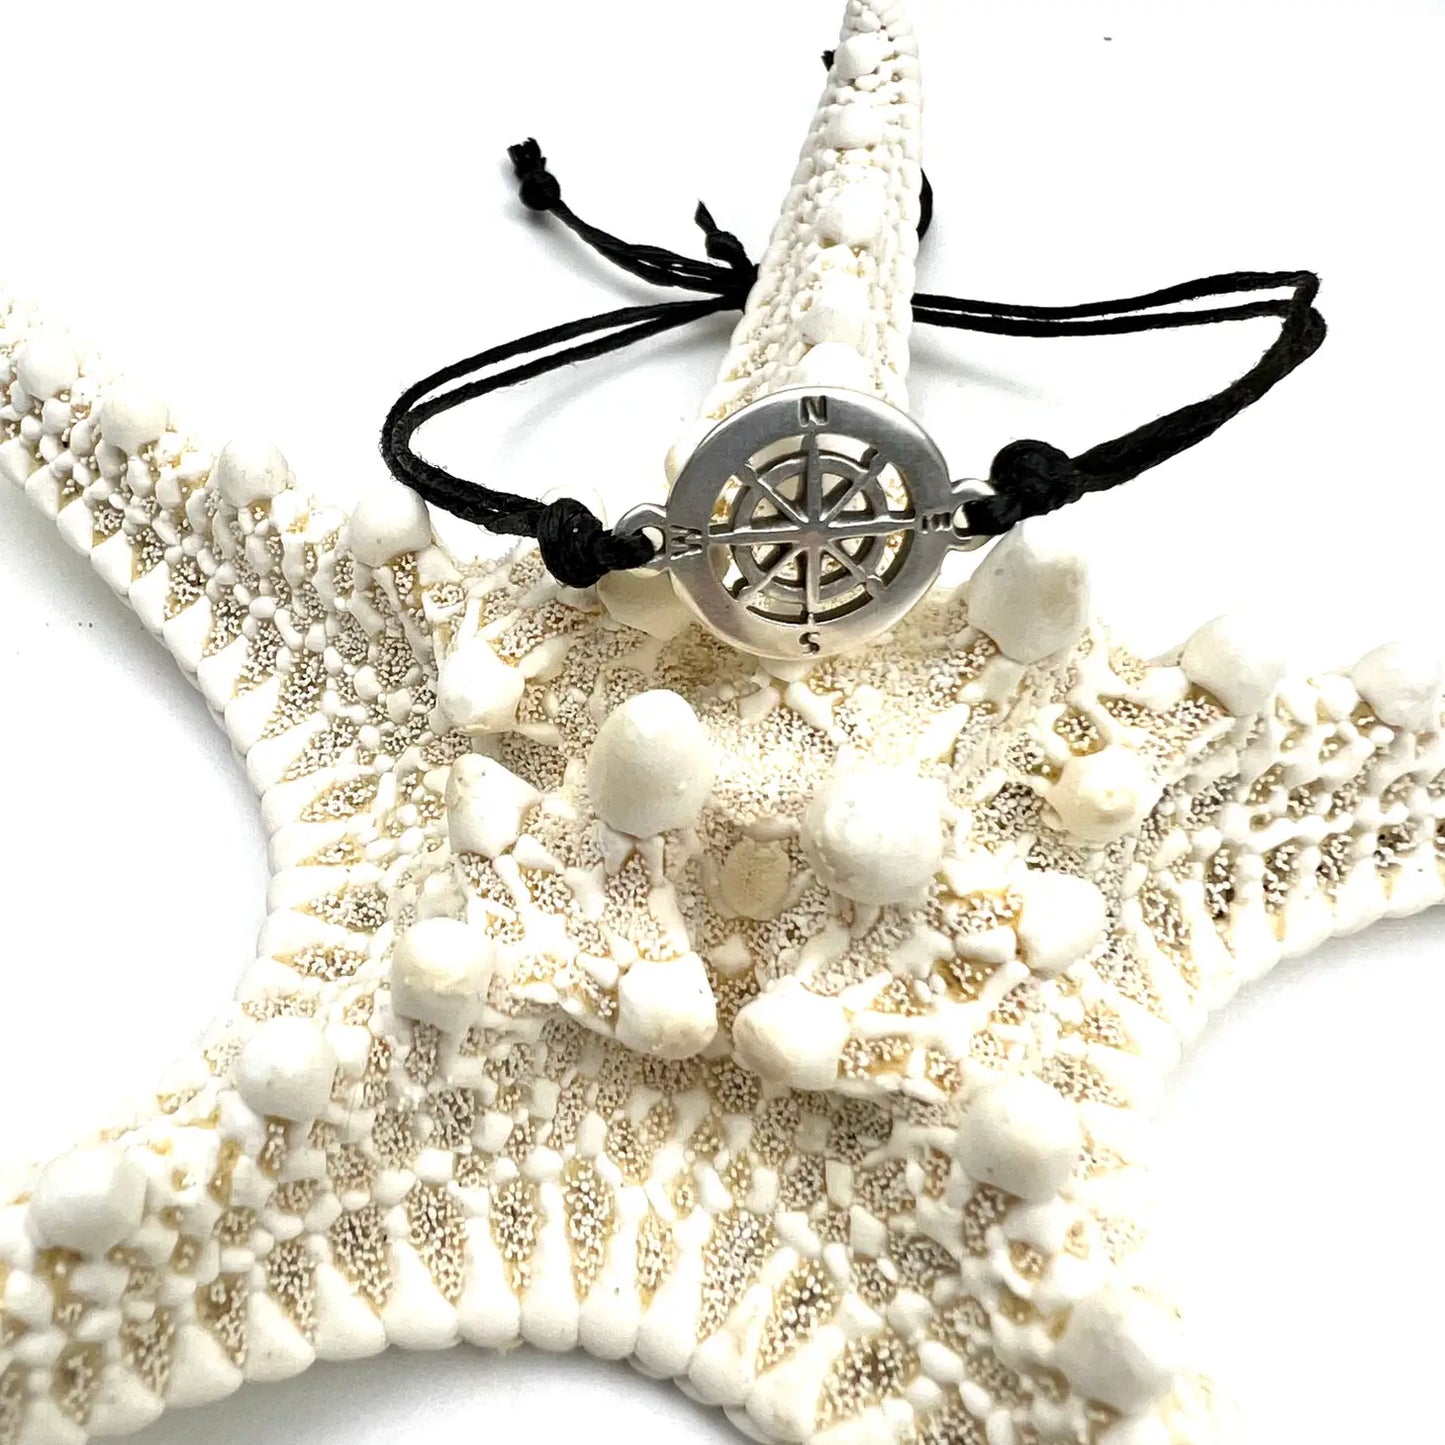 Jackie Gallagher Designs - Waxed Cord Beach Charm Bracelets